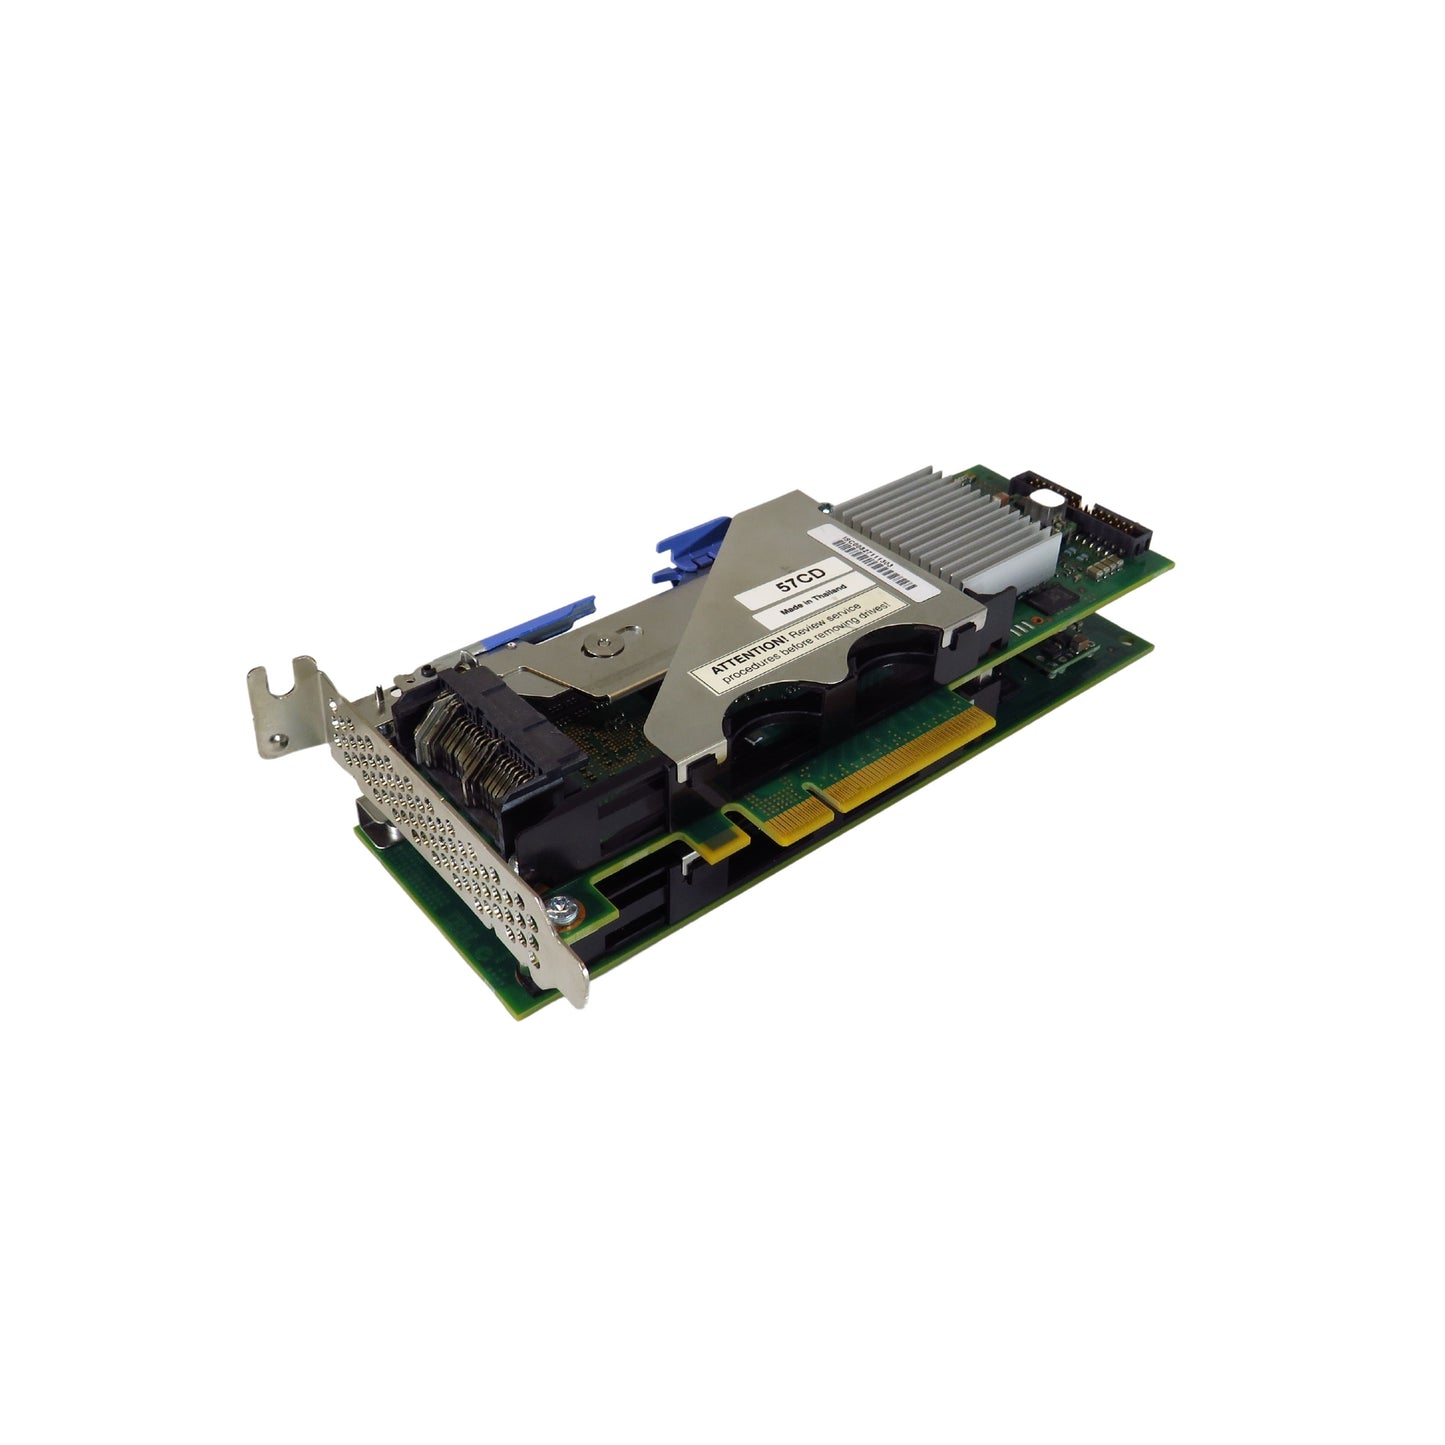 IBM 2053 57CD PCIe RAID & SSD SAS 3Gbps pSeries Adapter (Refurbished)